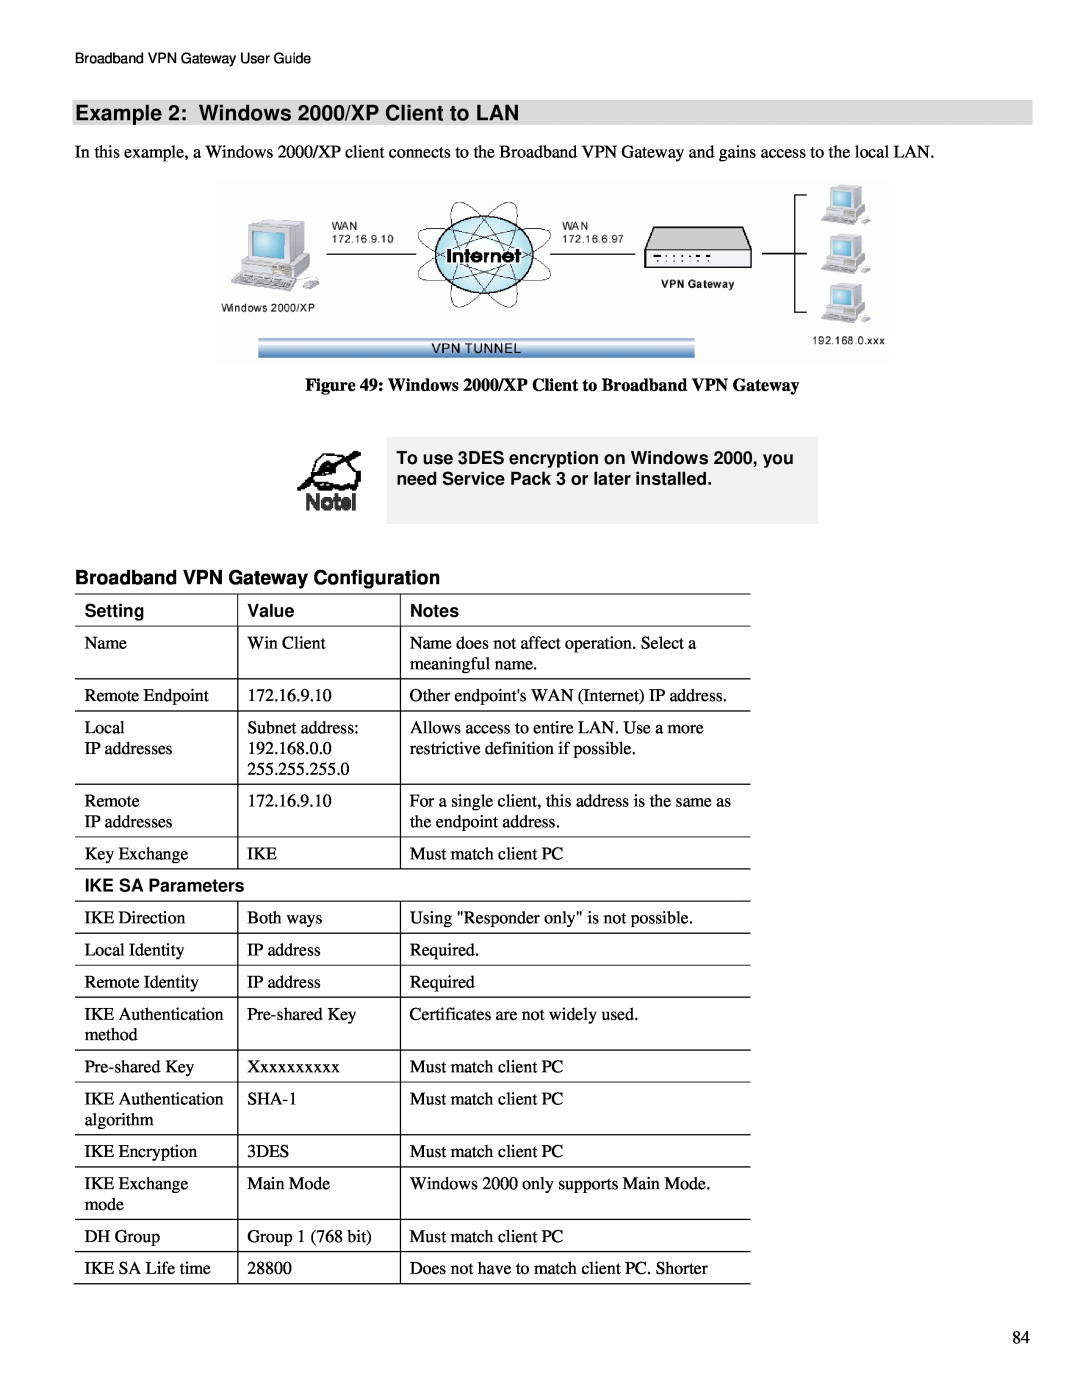 TRENDnet TW100-BRV324 manual Example 2 Windows 2000/XP Client to LAN, Broadband VPN Gateway Configuration, Setting, Value 